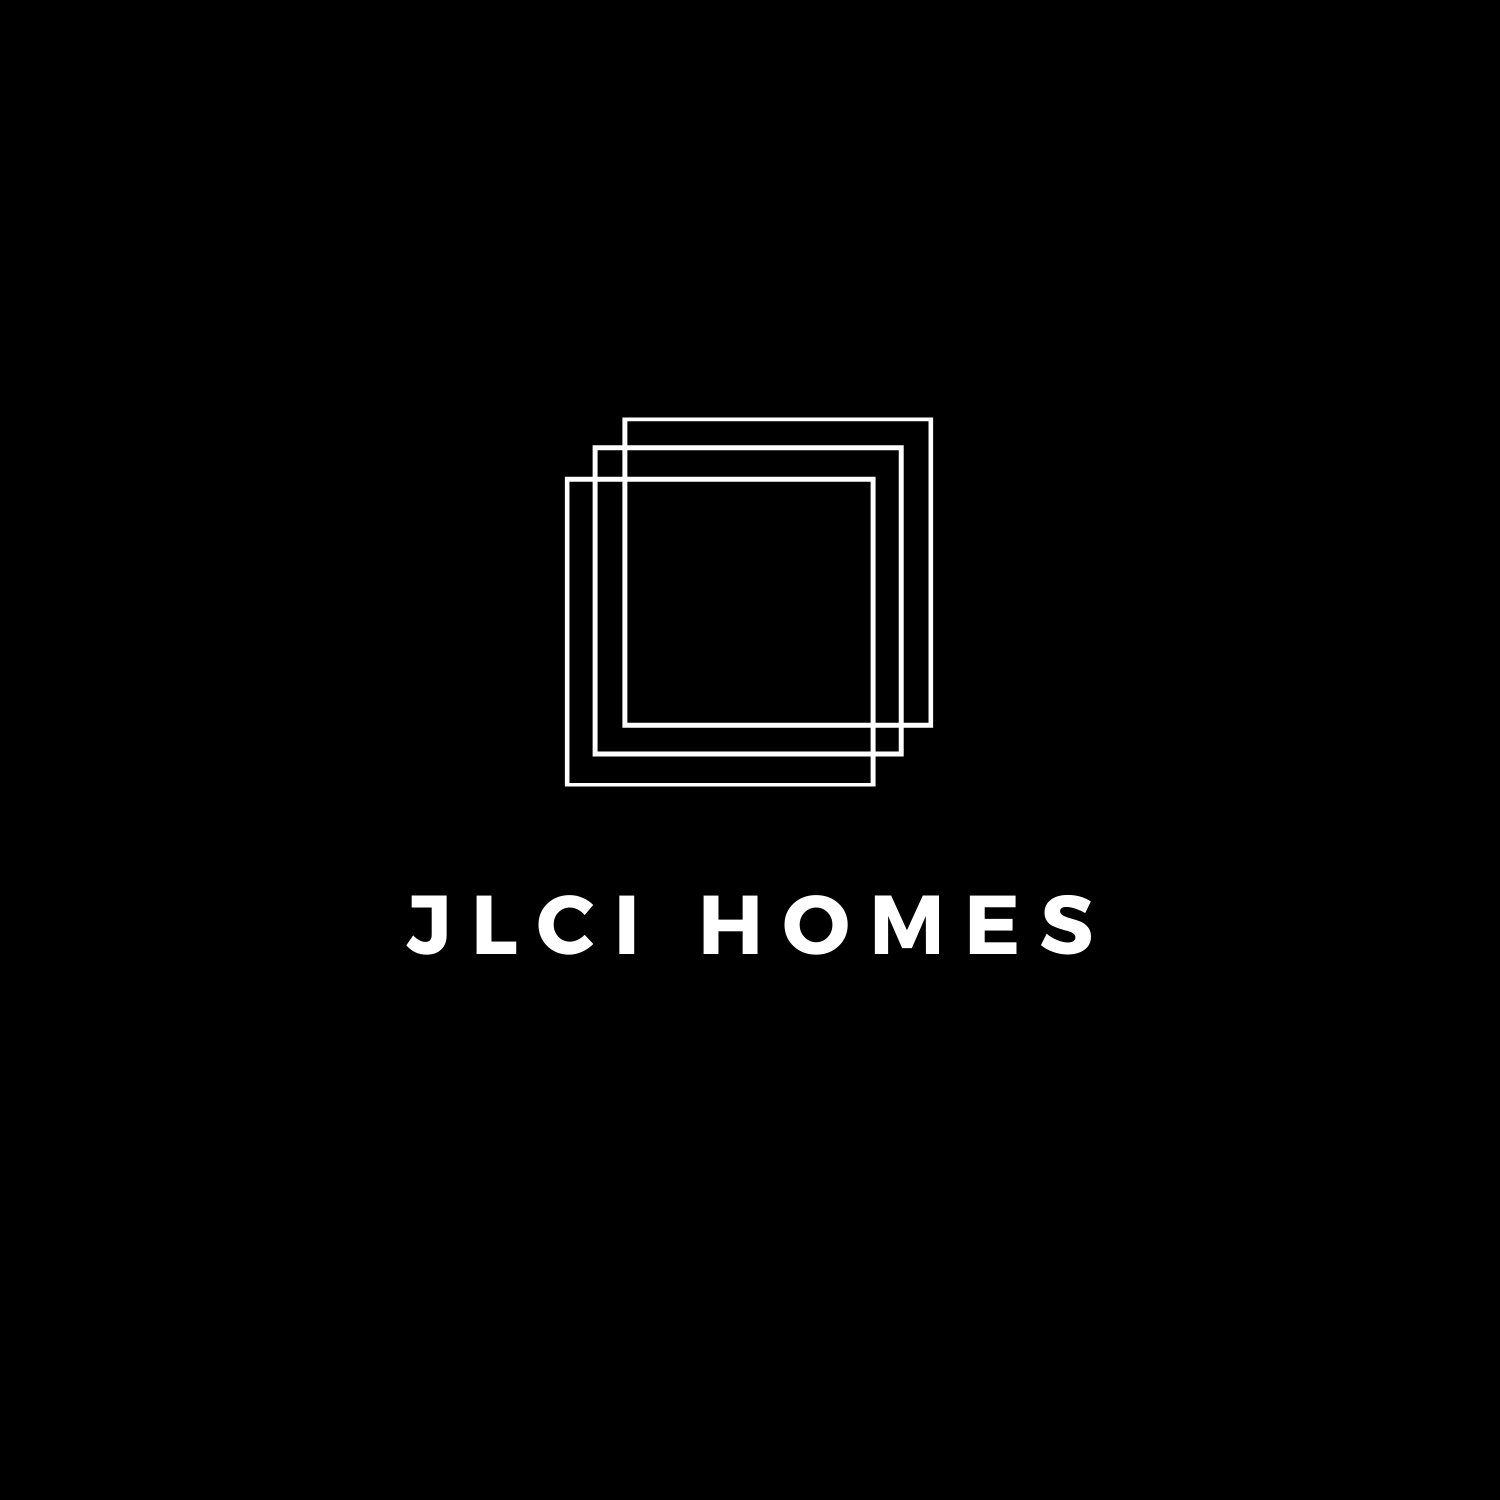 JLCI Homes